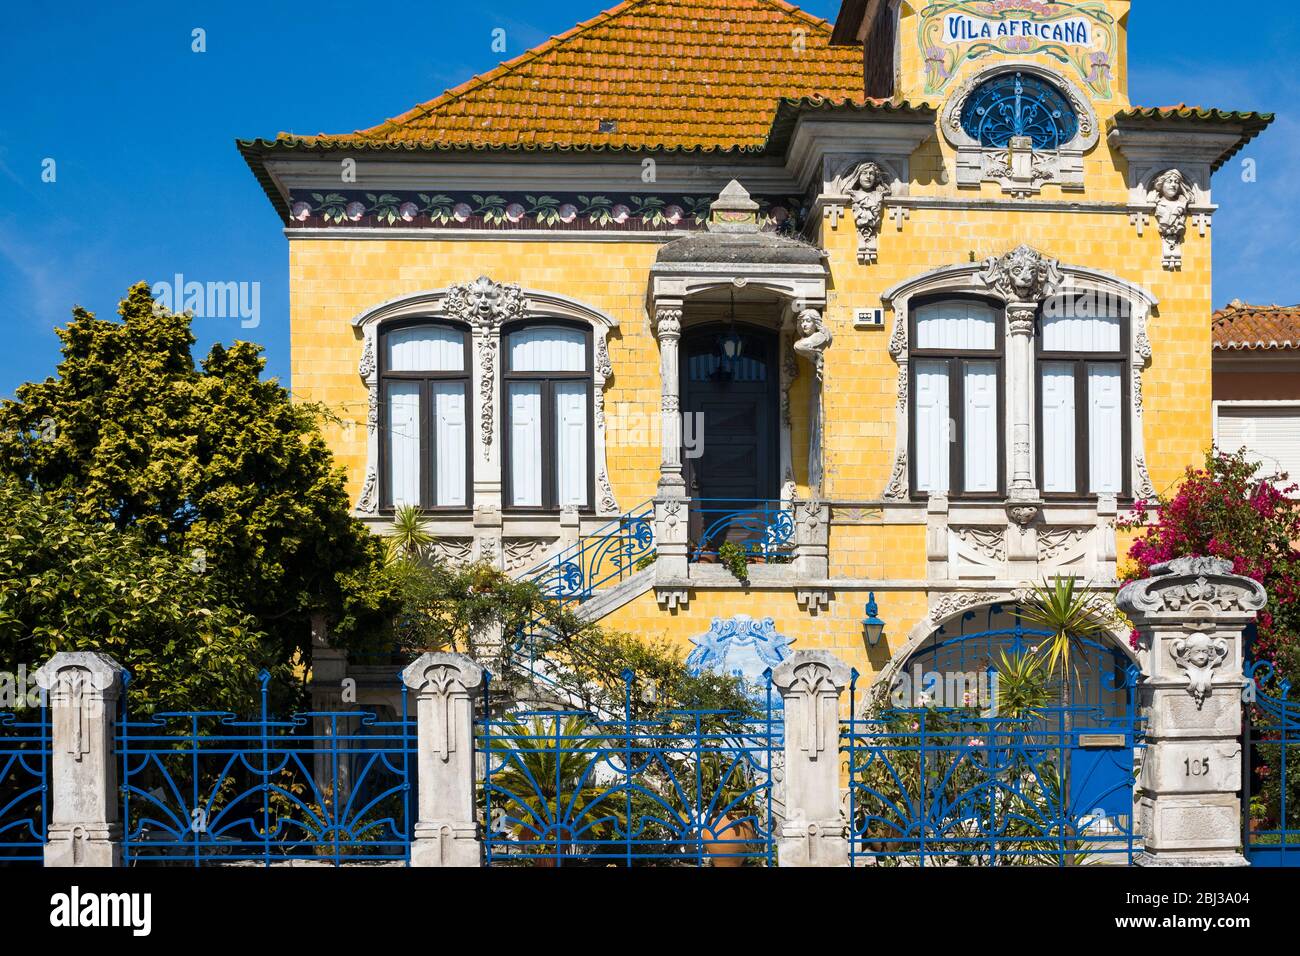 Fachada de Vila Africana, siglo XX estilo Art Nouveau tradicional arquitectura propiedad de interés público en Ilhavo por Aveiro, Portugal Foto de stock